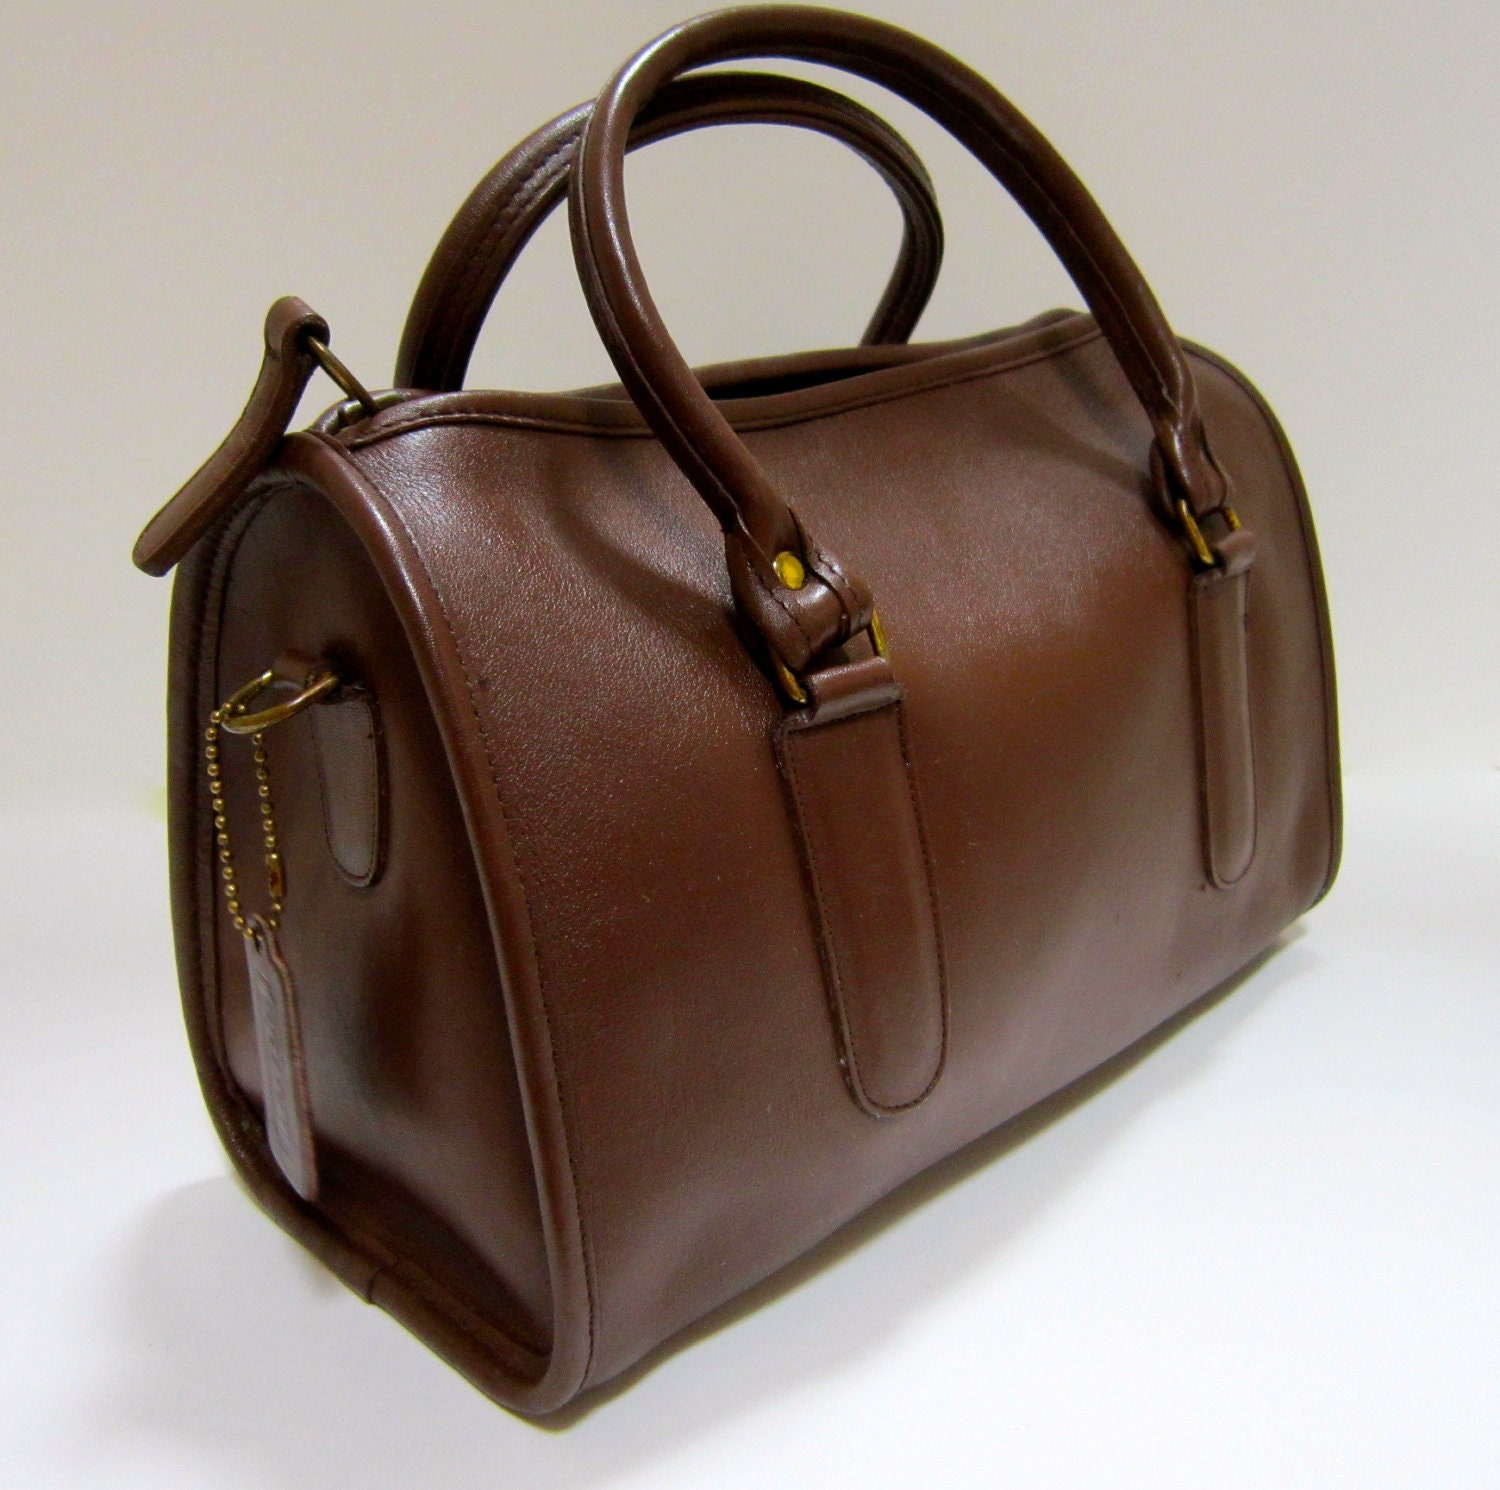 Vintage Coach zip top satchel in chocolate by dejavuvintageretro